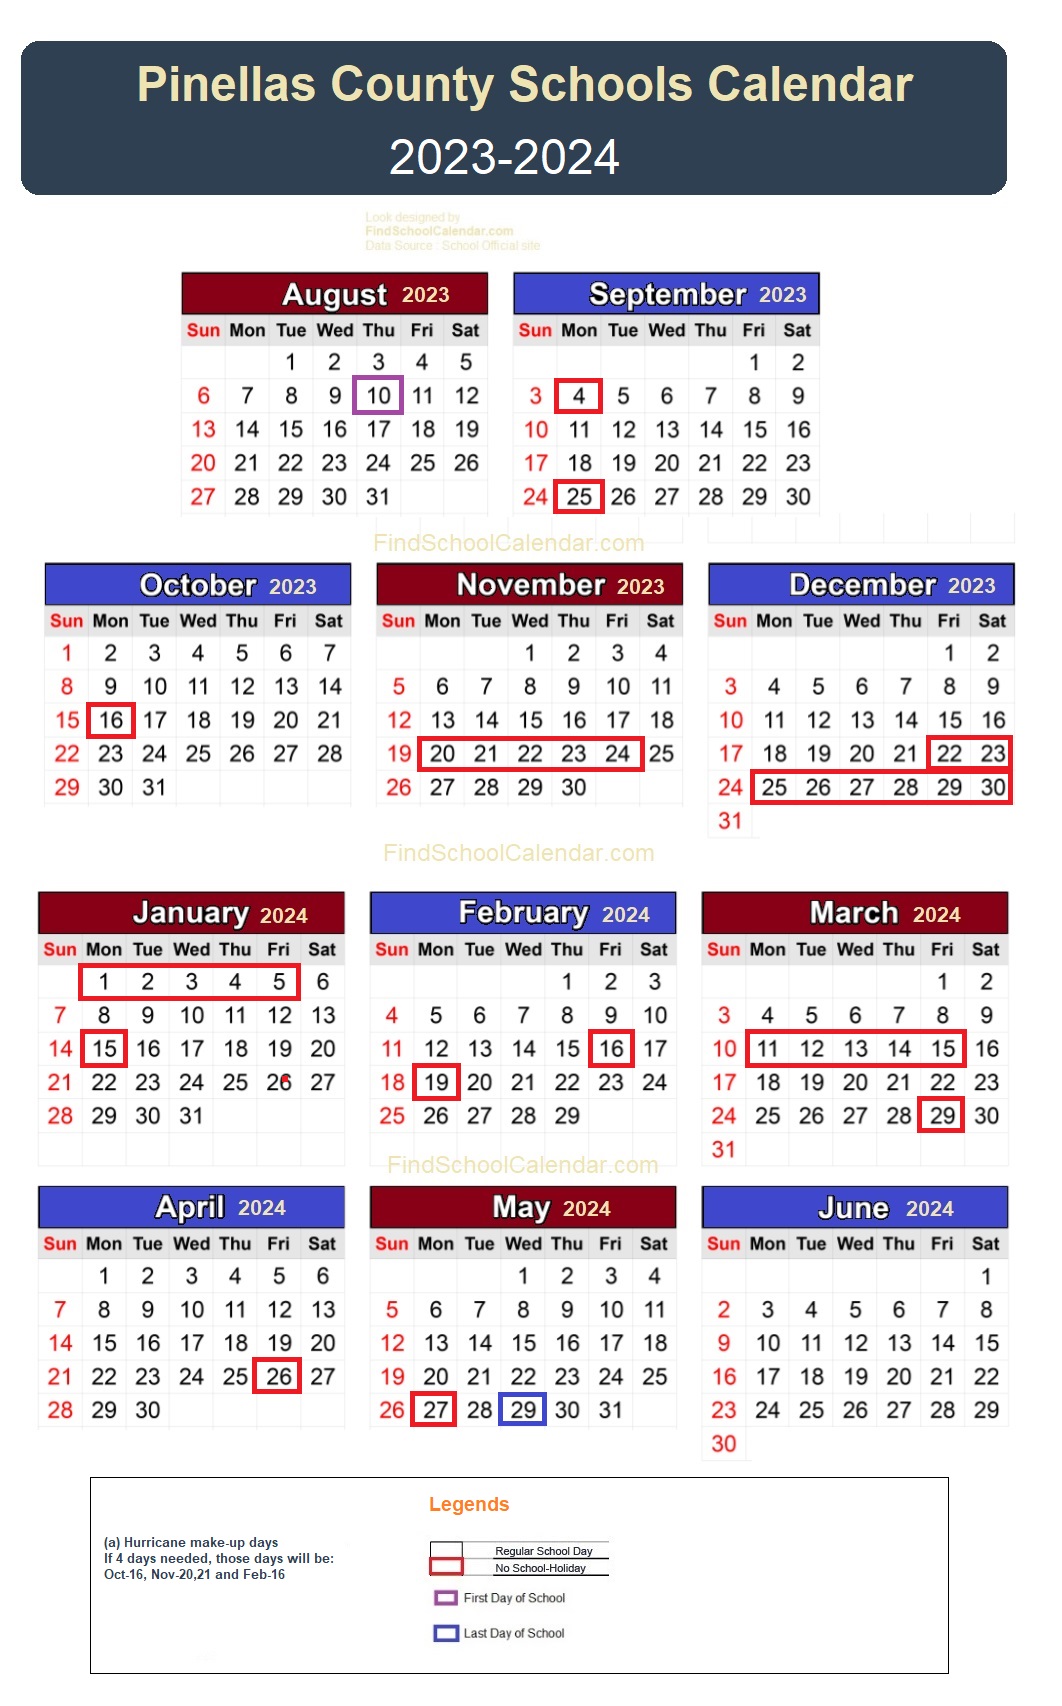 Pinellas County School District Calendar 23-24